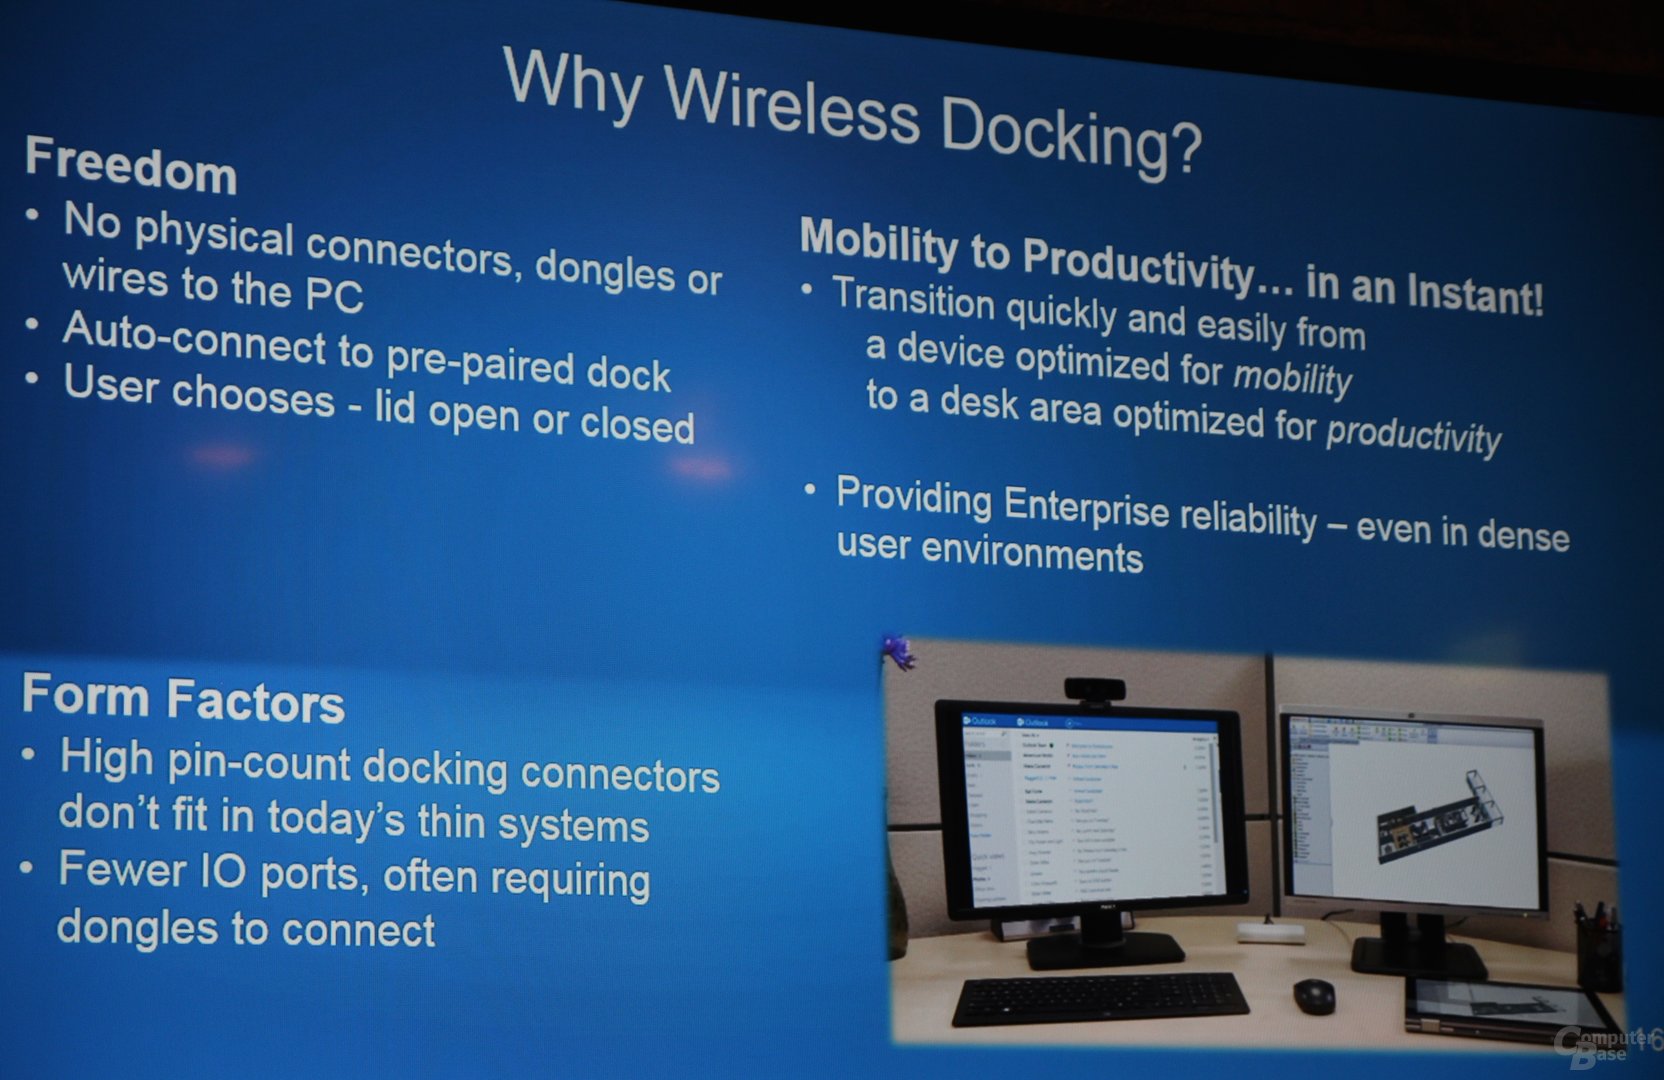 Intel Wireless Docking